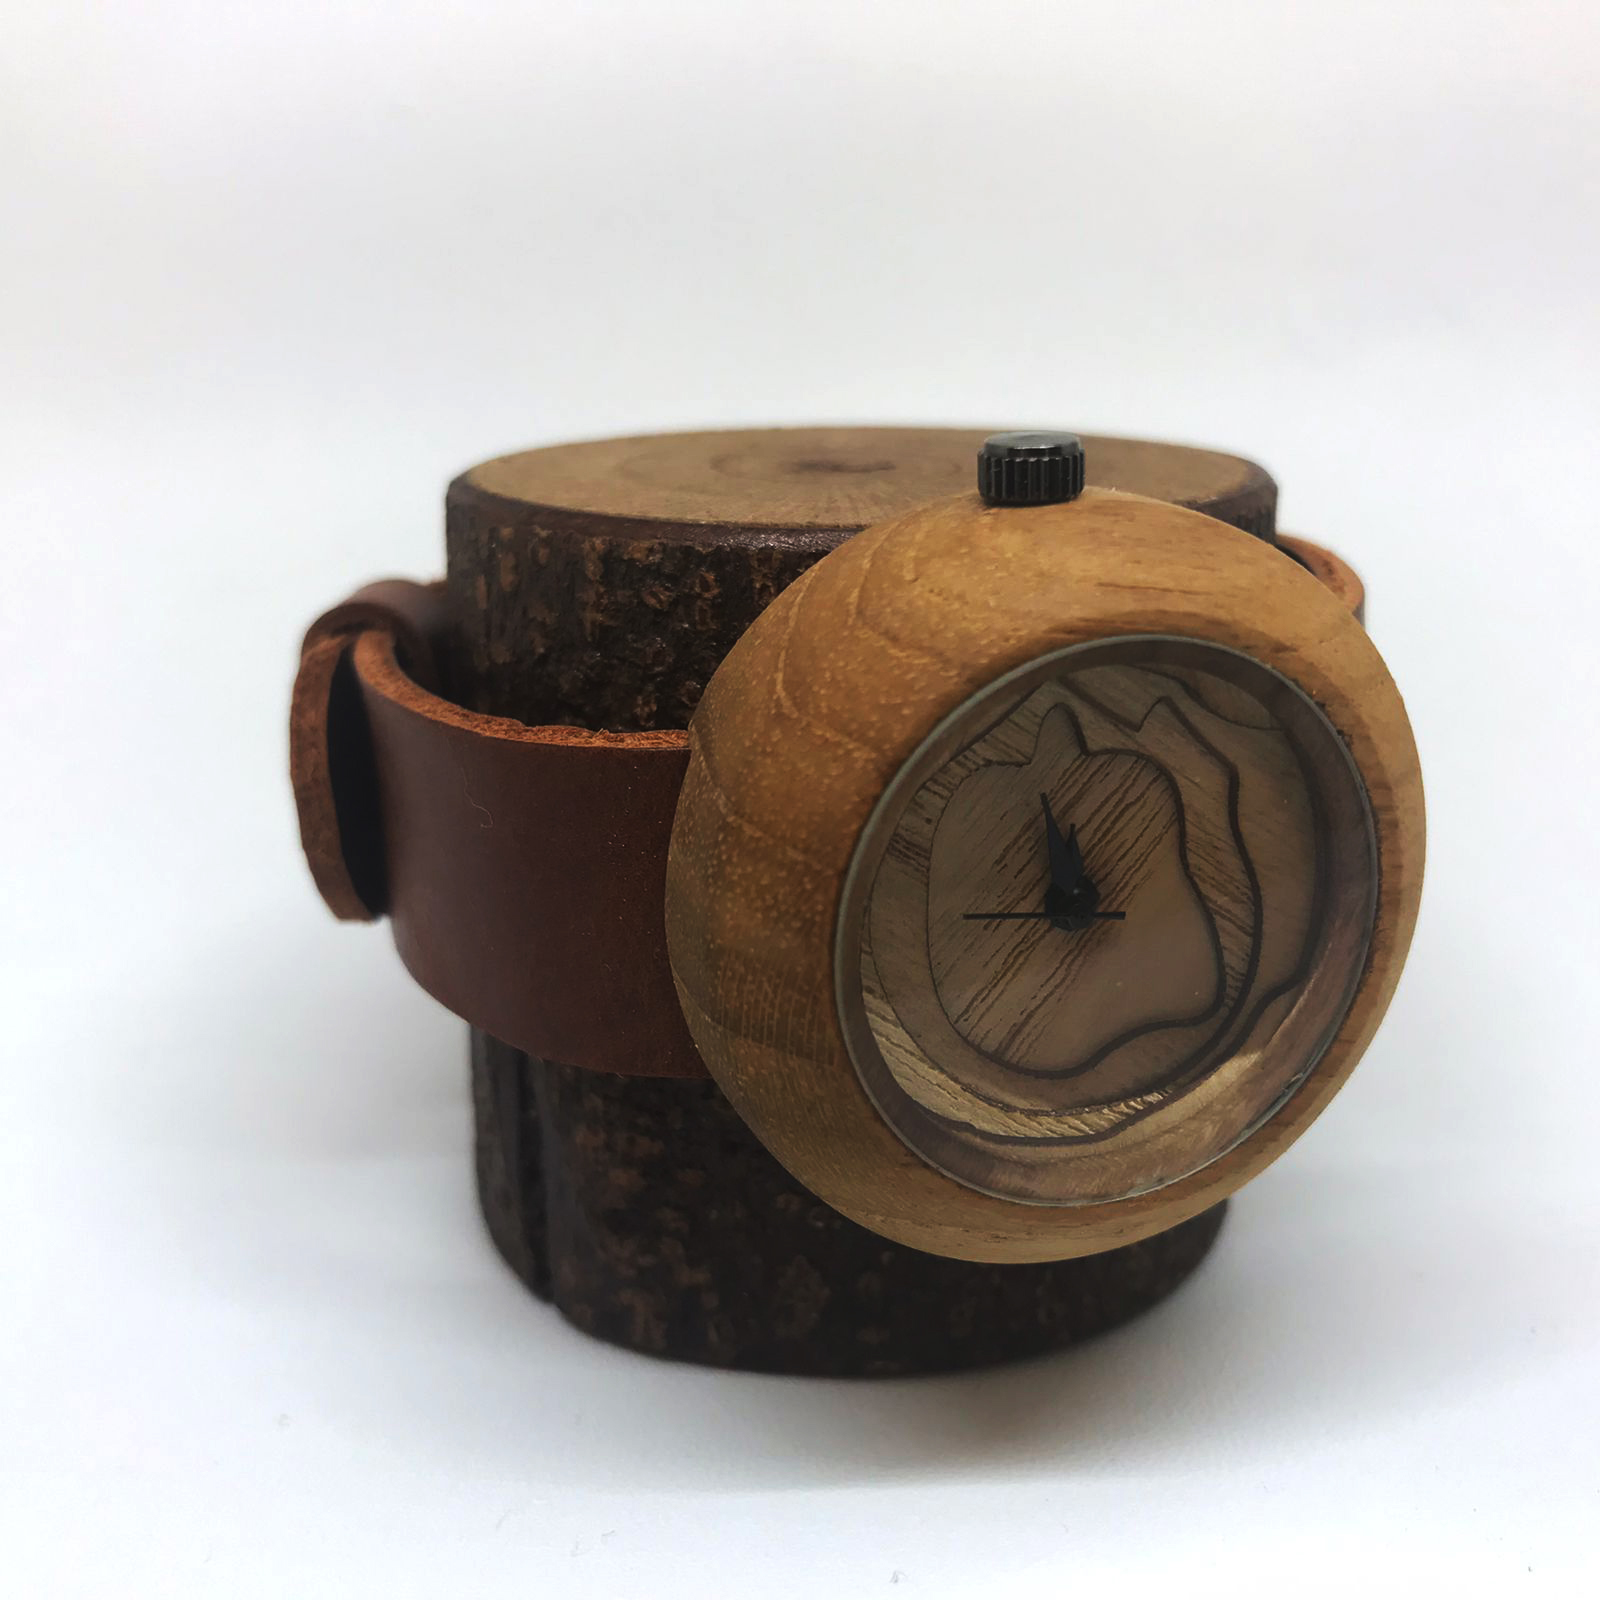 Kailoka Wooden Product